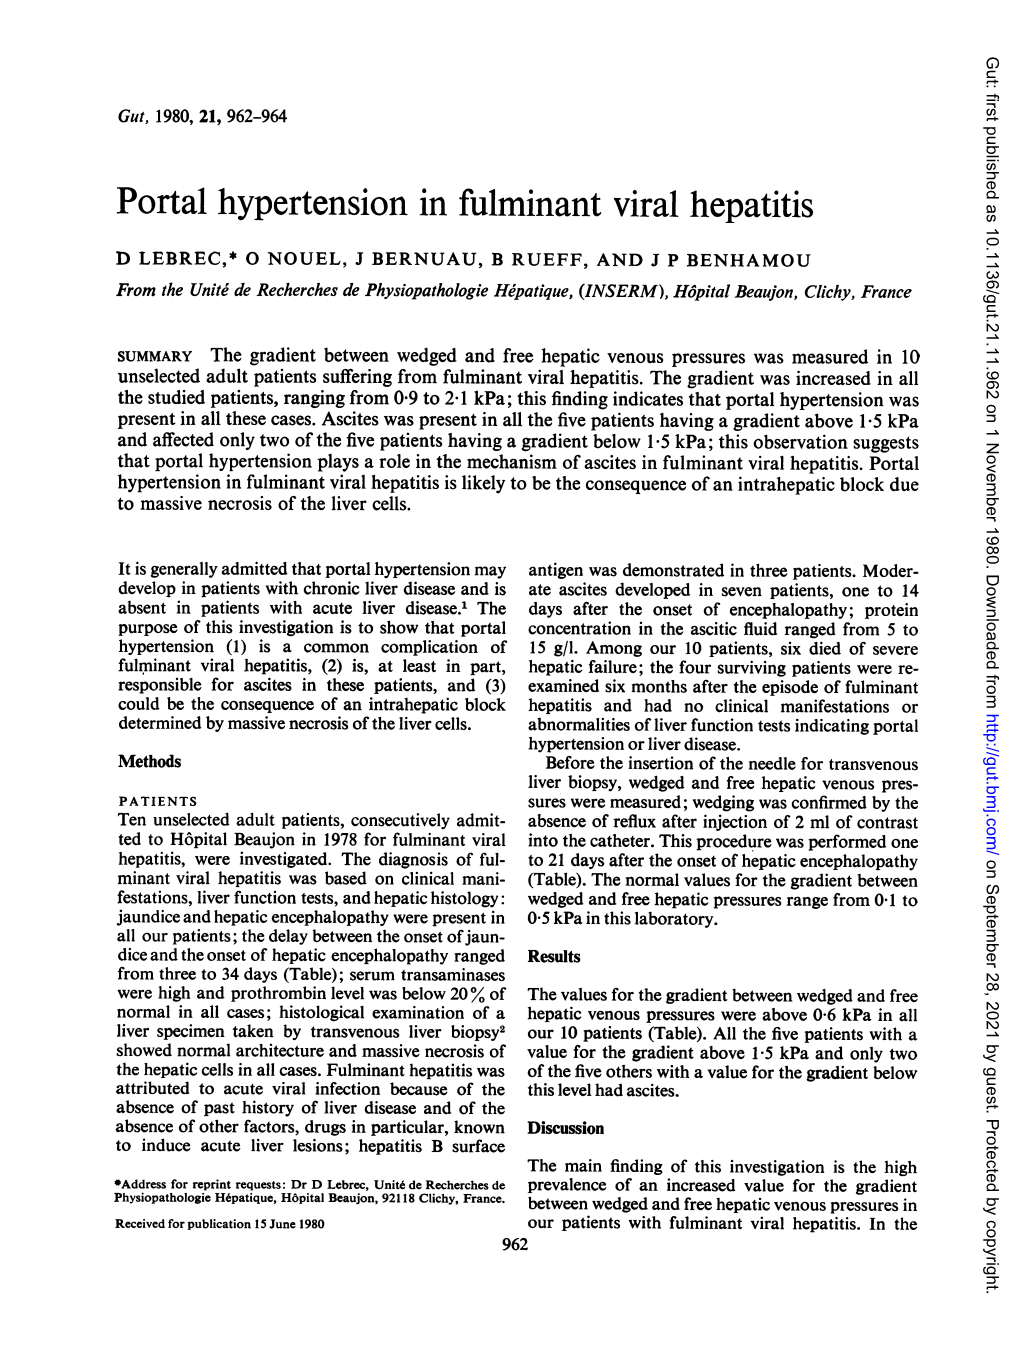 Portal Hypertension in Fulminant Viral Hepatitis